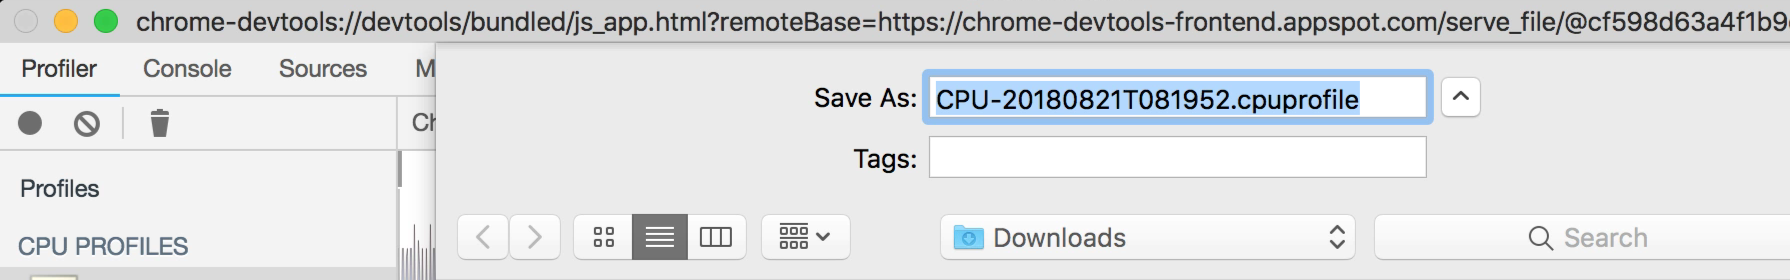 Saving the ".cpuprofile" file